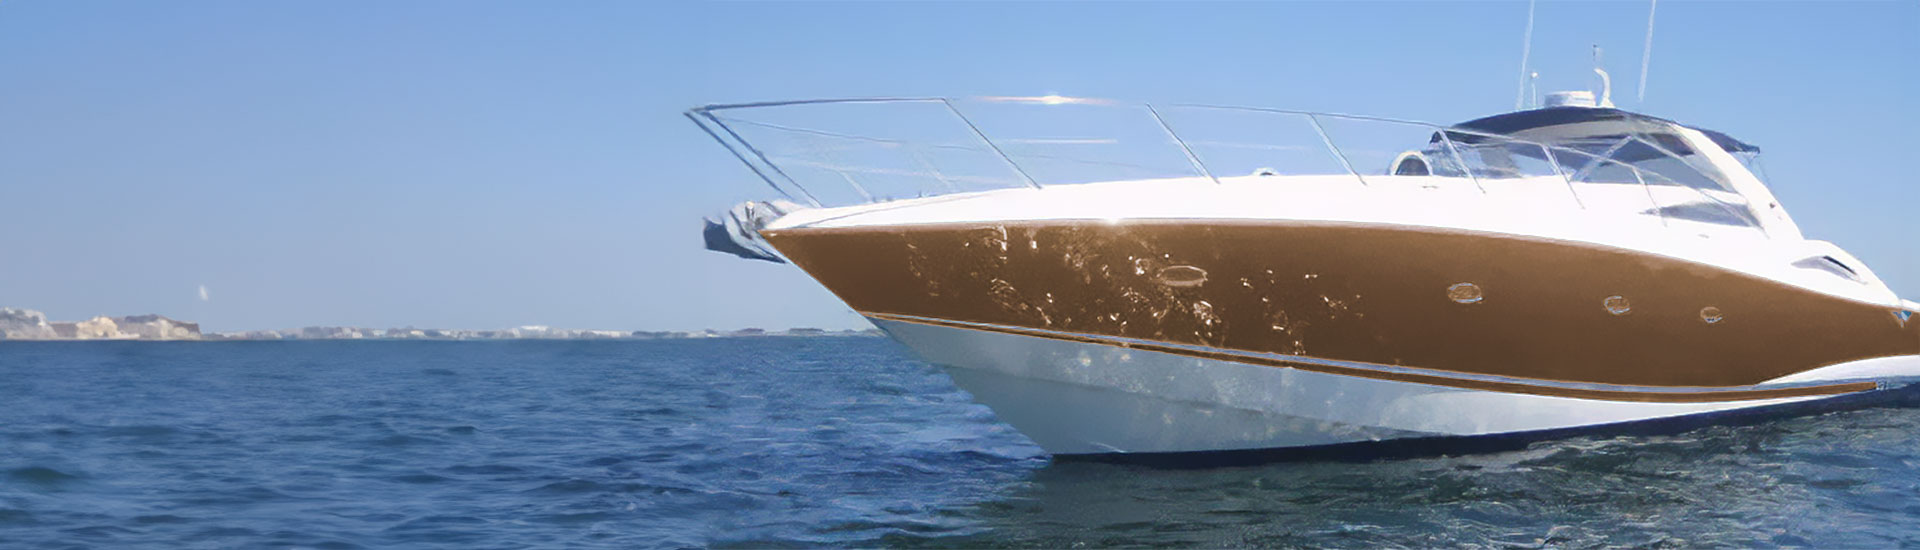 Solar Glow - Spray Ceramic Coating For Boats - YACHTE